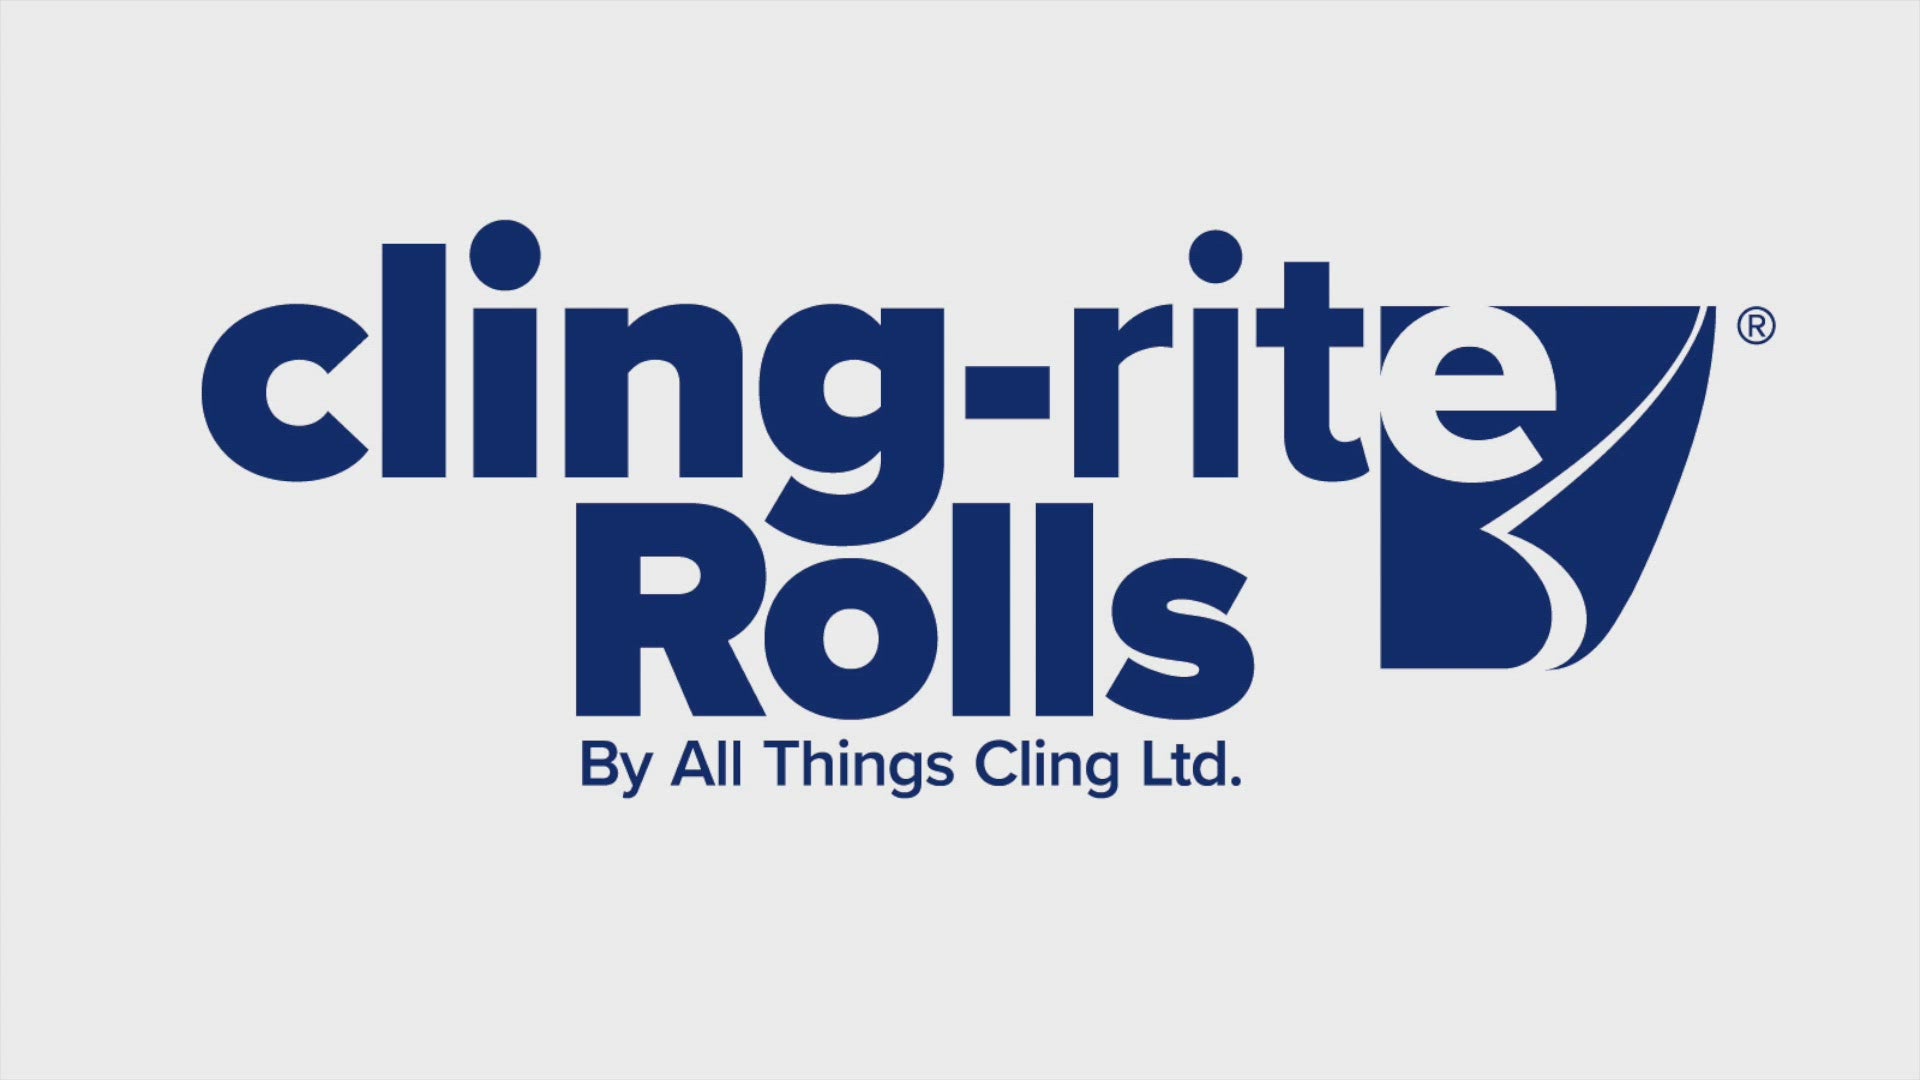 Kids Cling-rite Roll - CGS1005CLINGRITE, All Things Cling Ltd